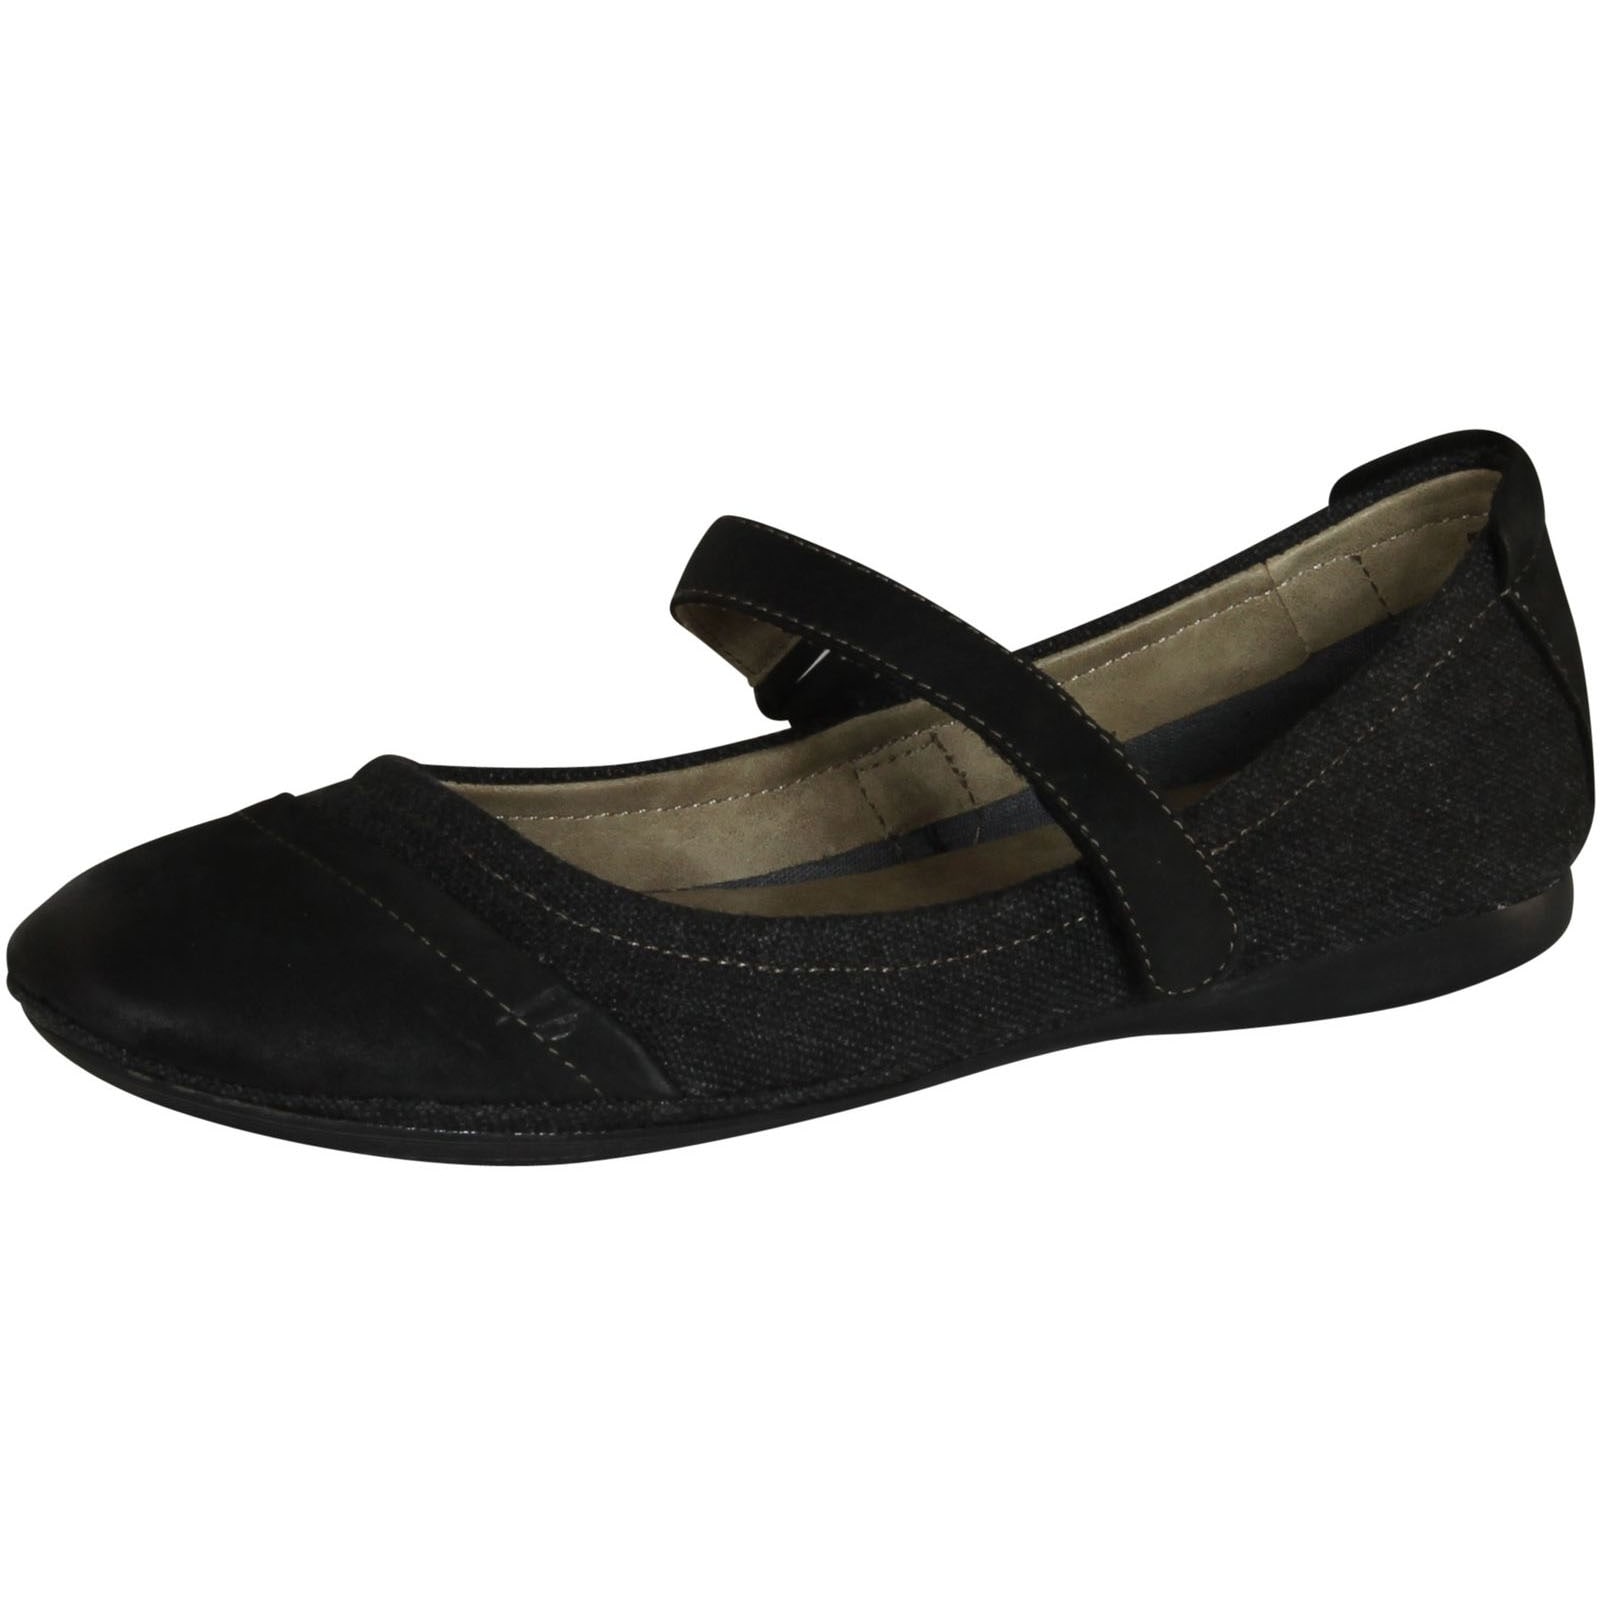 Pella Mary Jane Flats Shoes - Black 